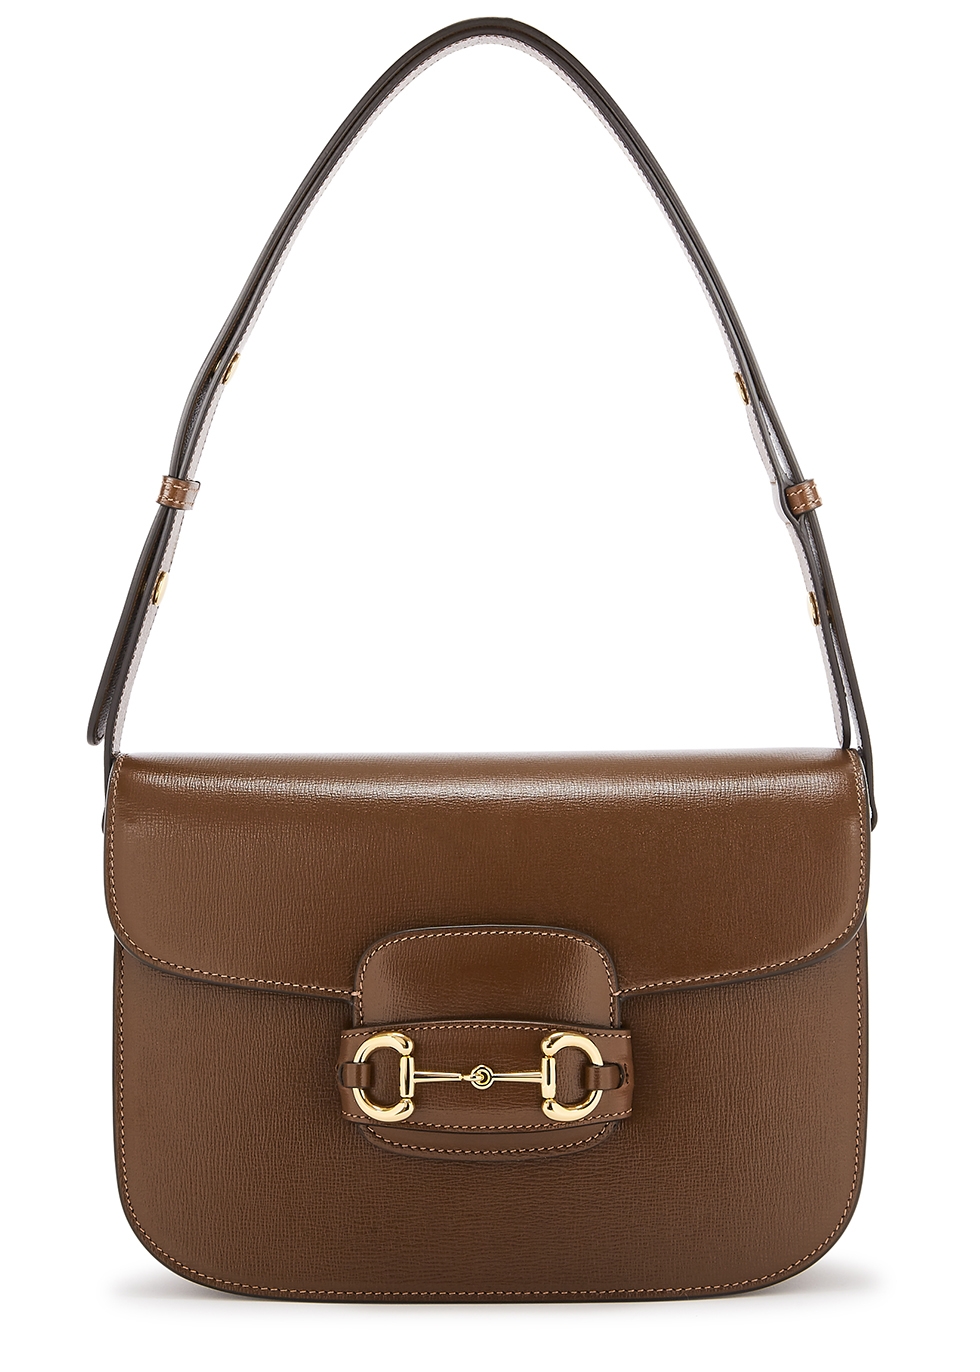 Gucci Morsetto brown leather shoulder bag - Harvey Nichols